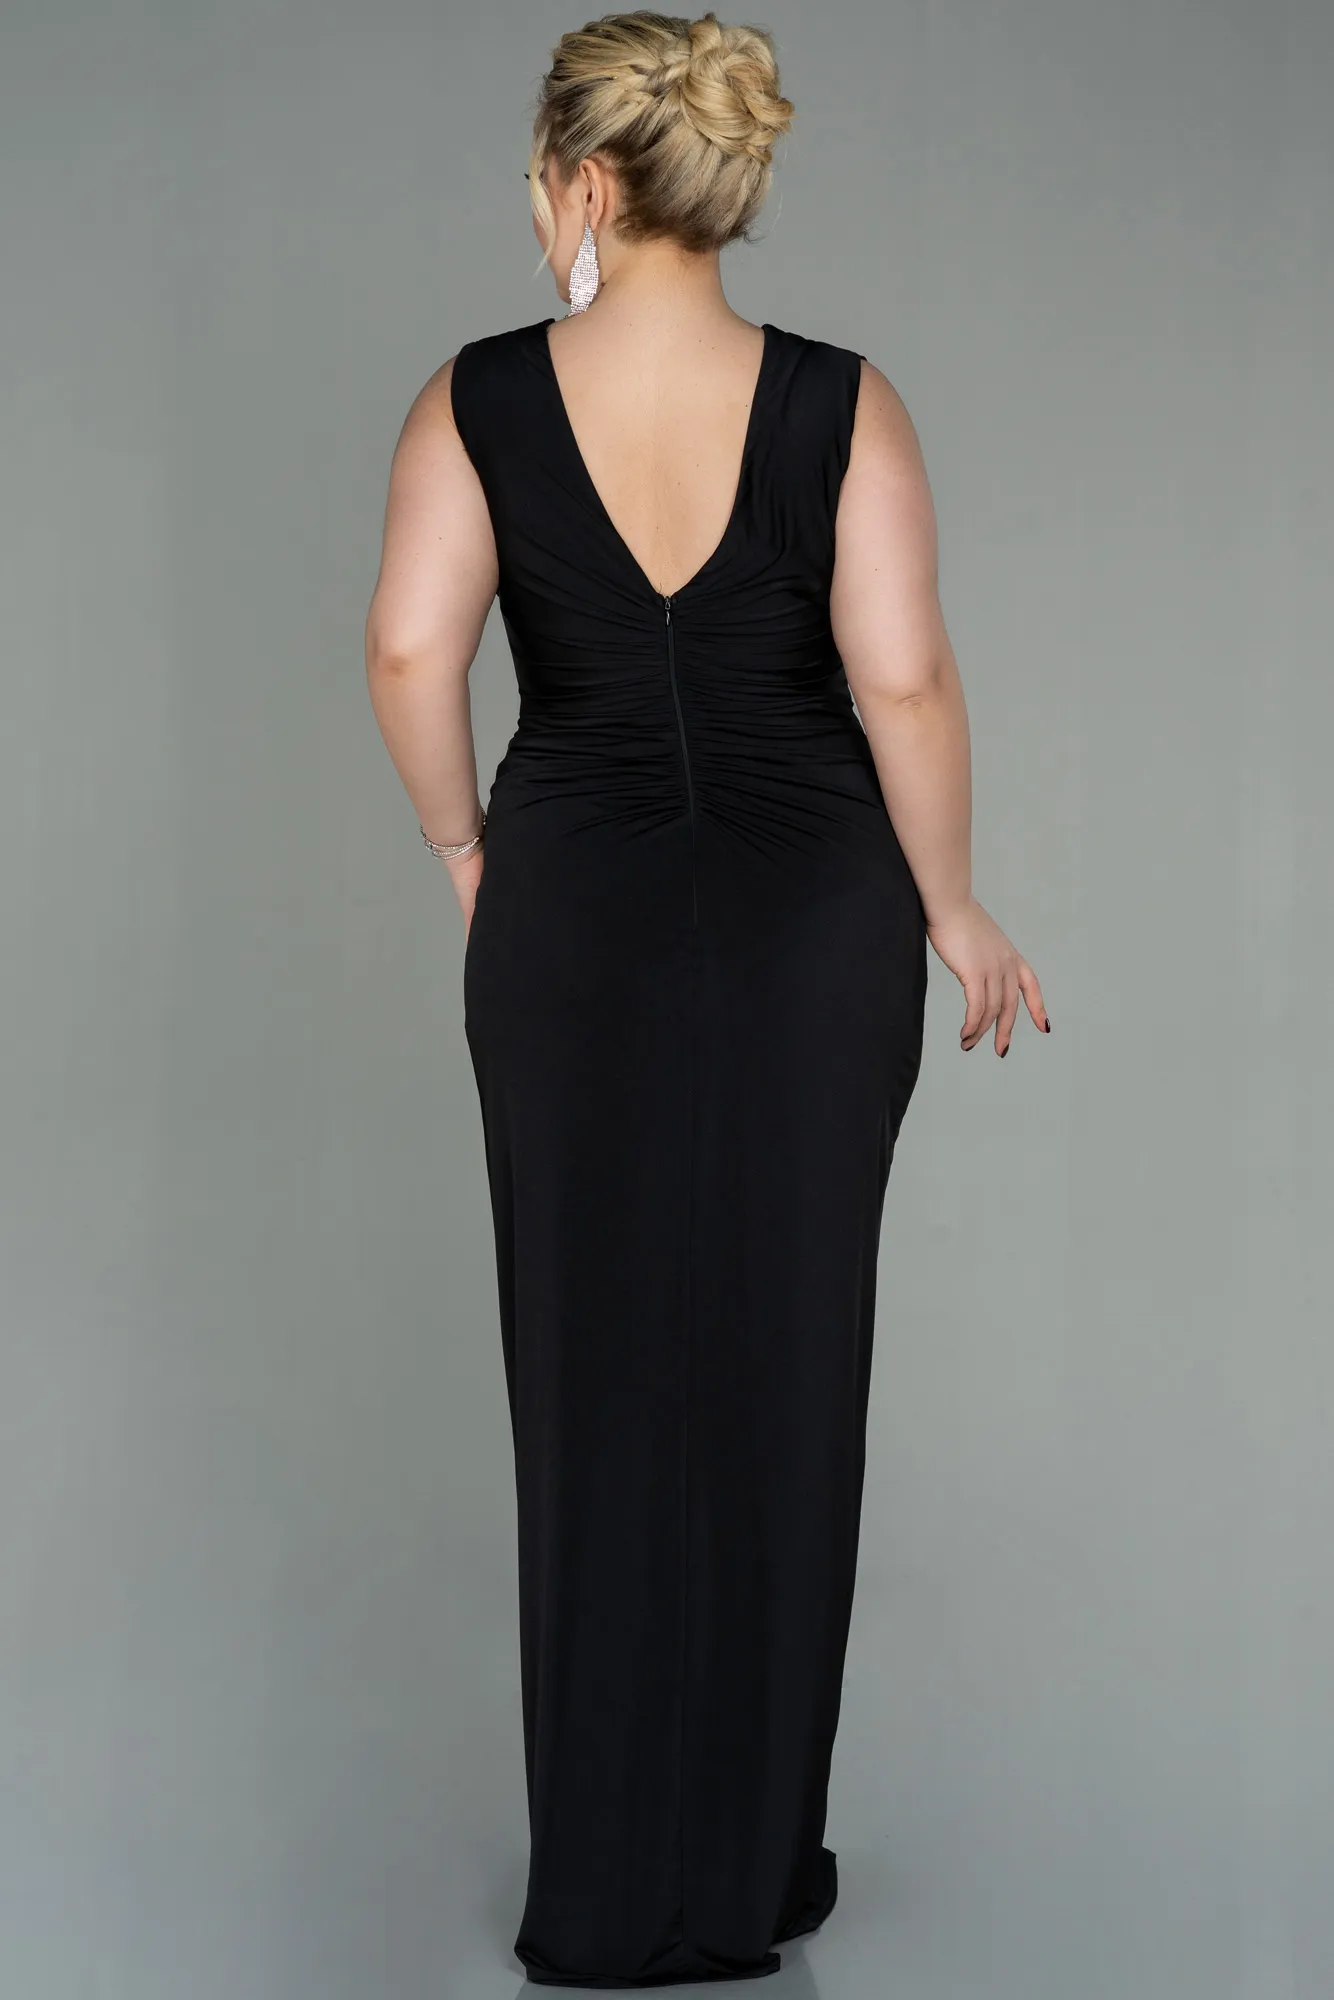 Black-Long Plus Size Evening Dress ABU2974